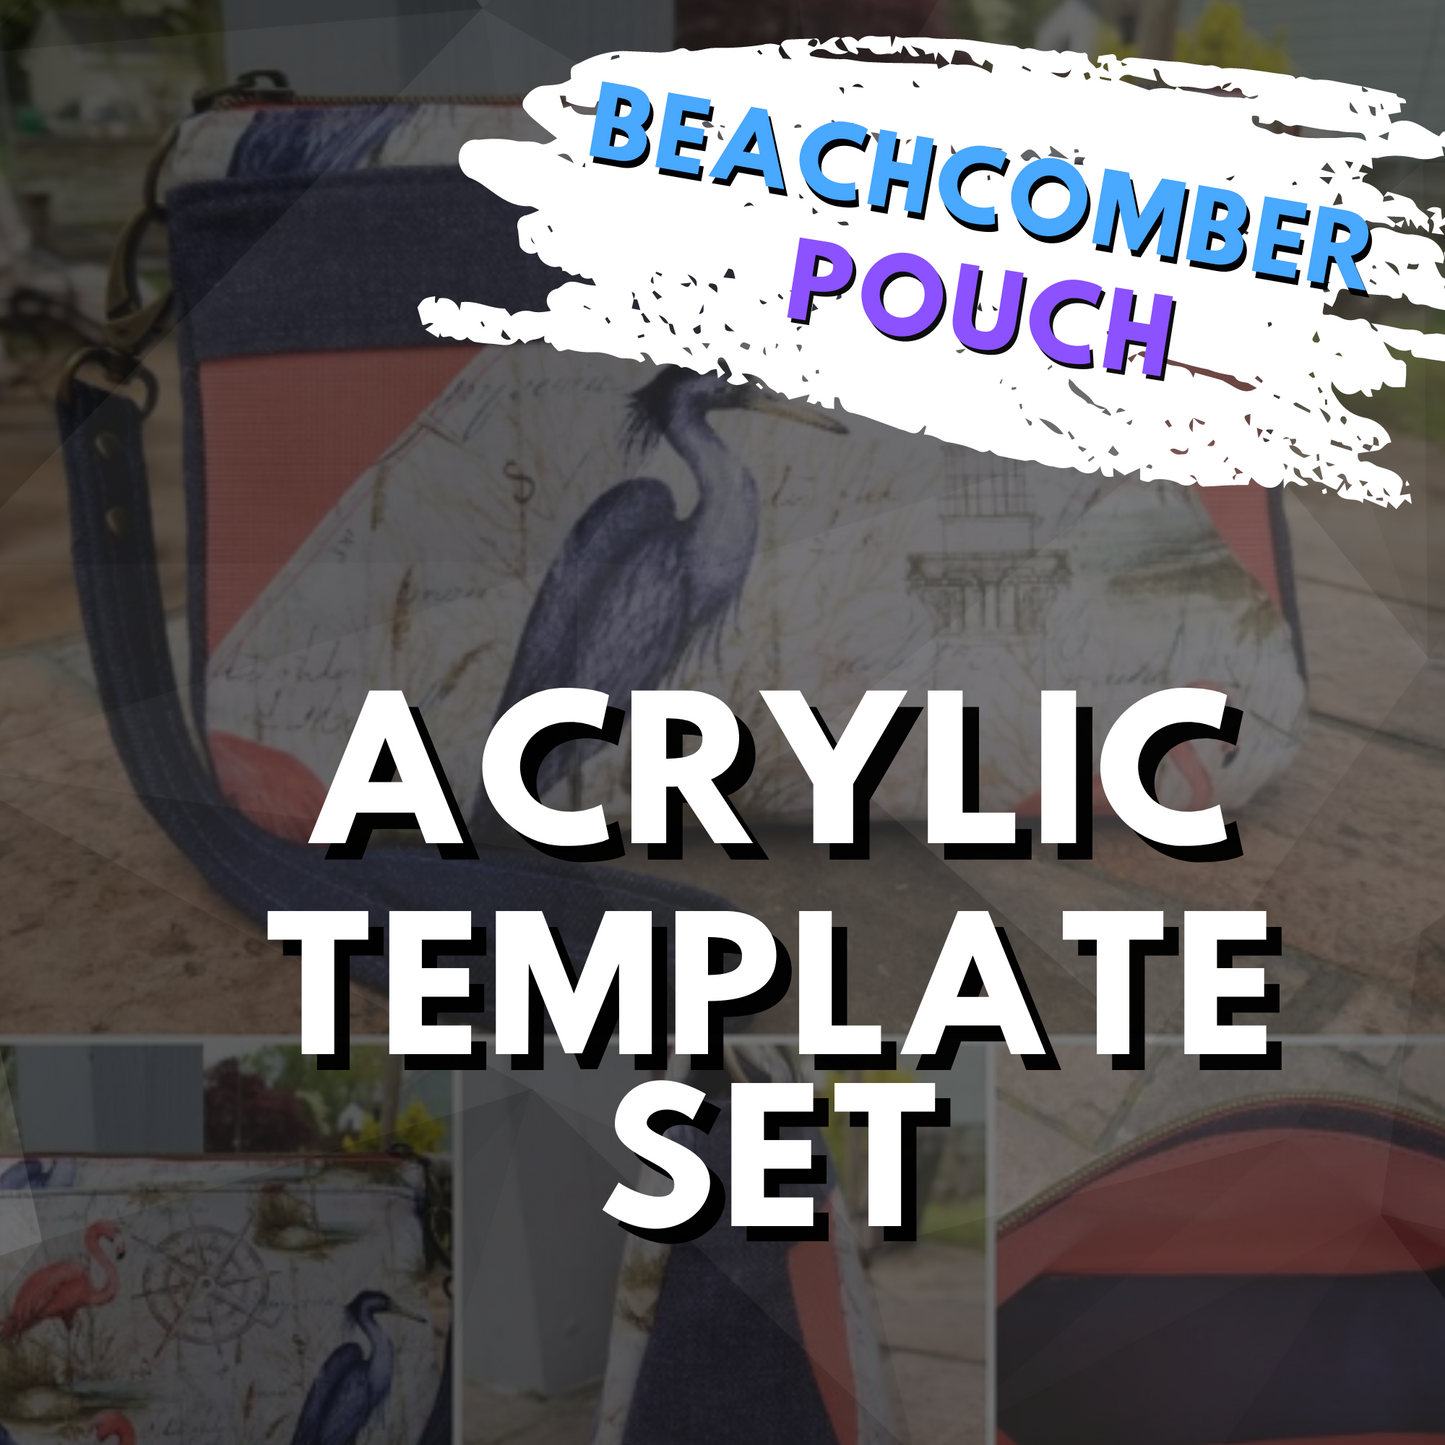 Beachcomber Pouch Acrylic Template Set